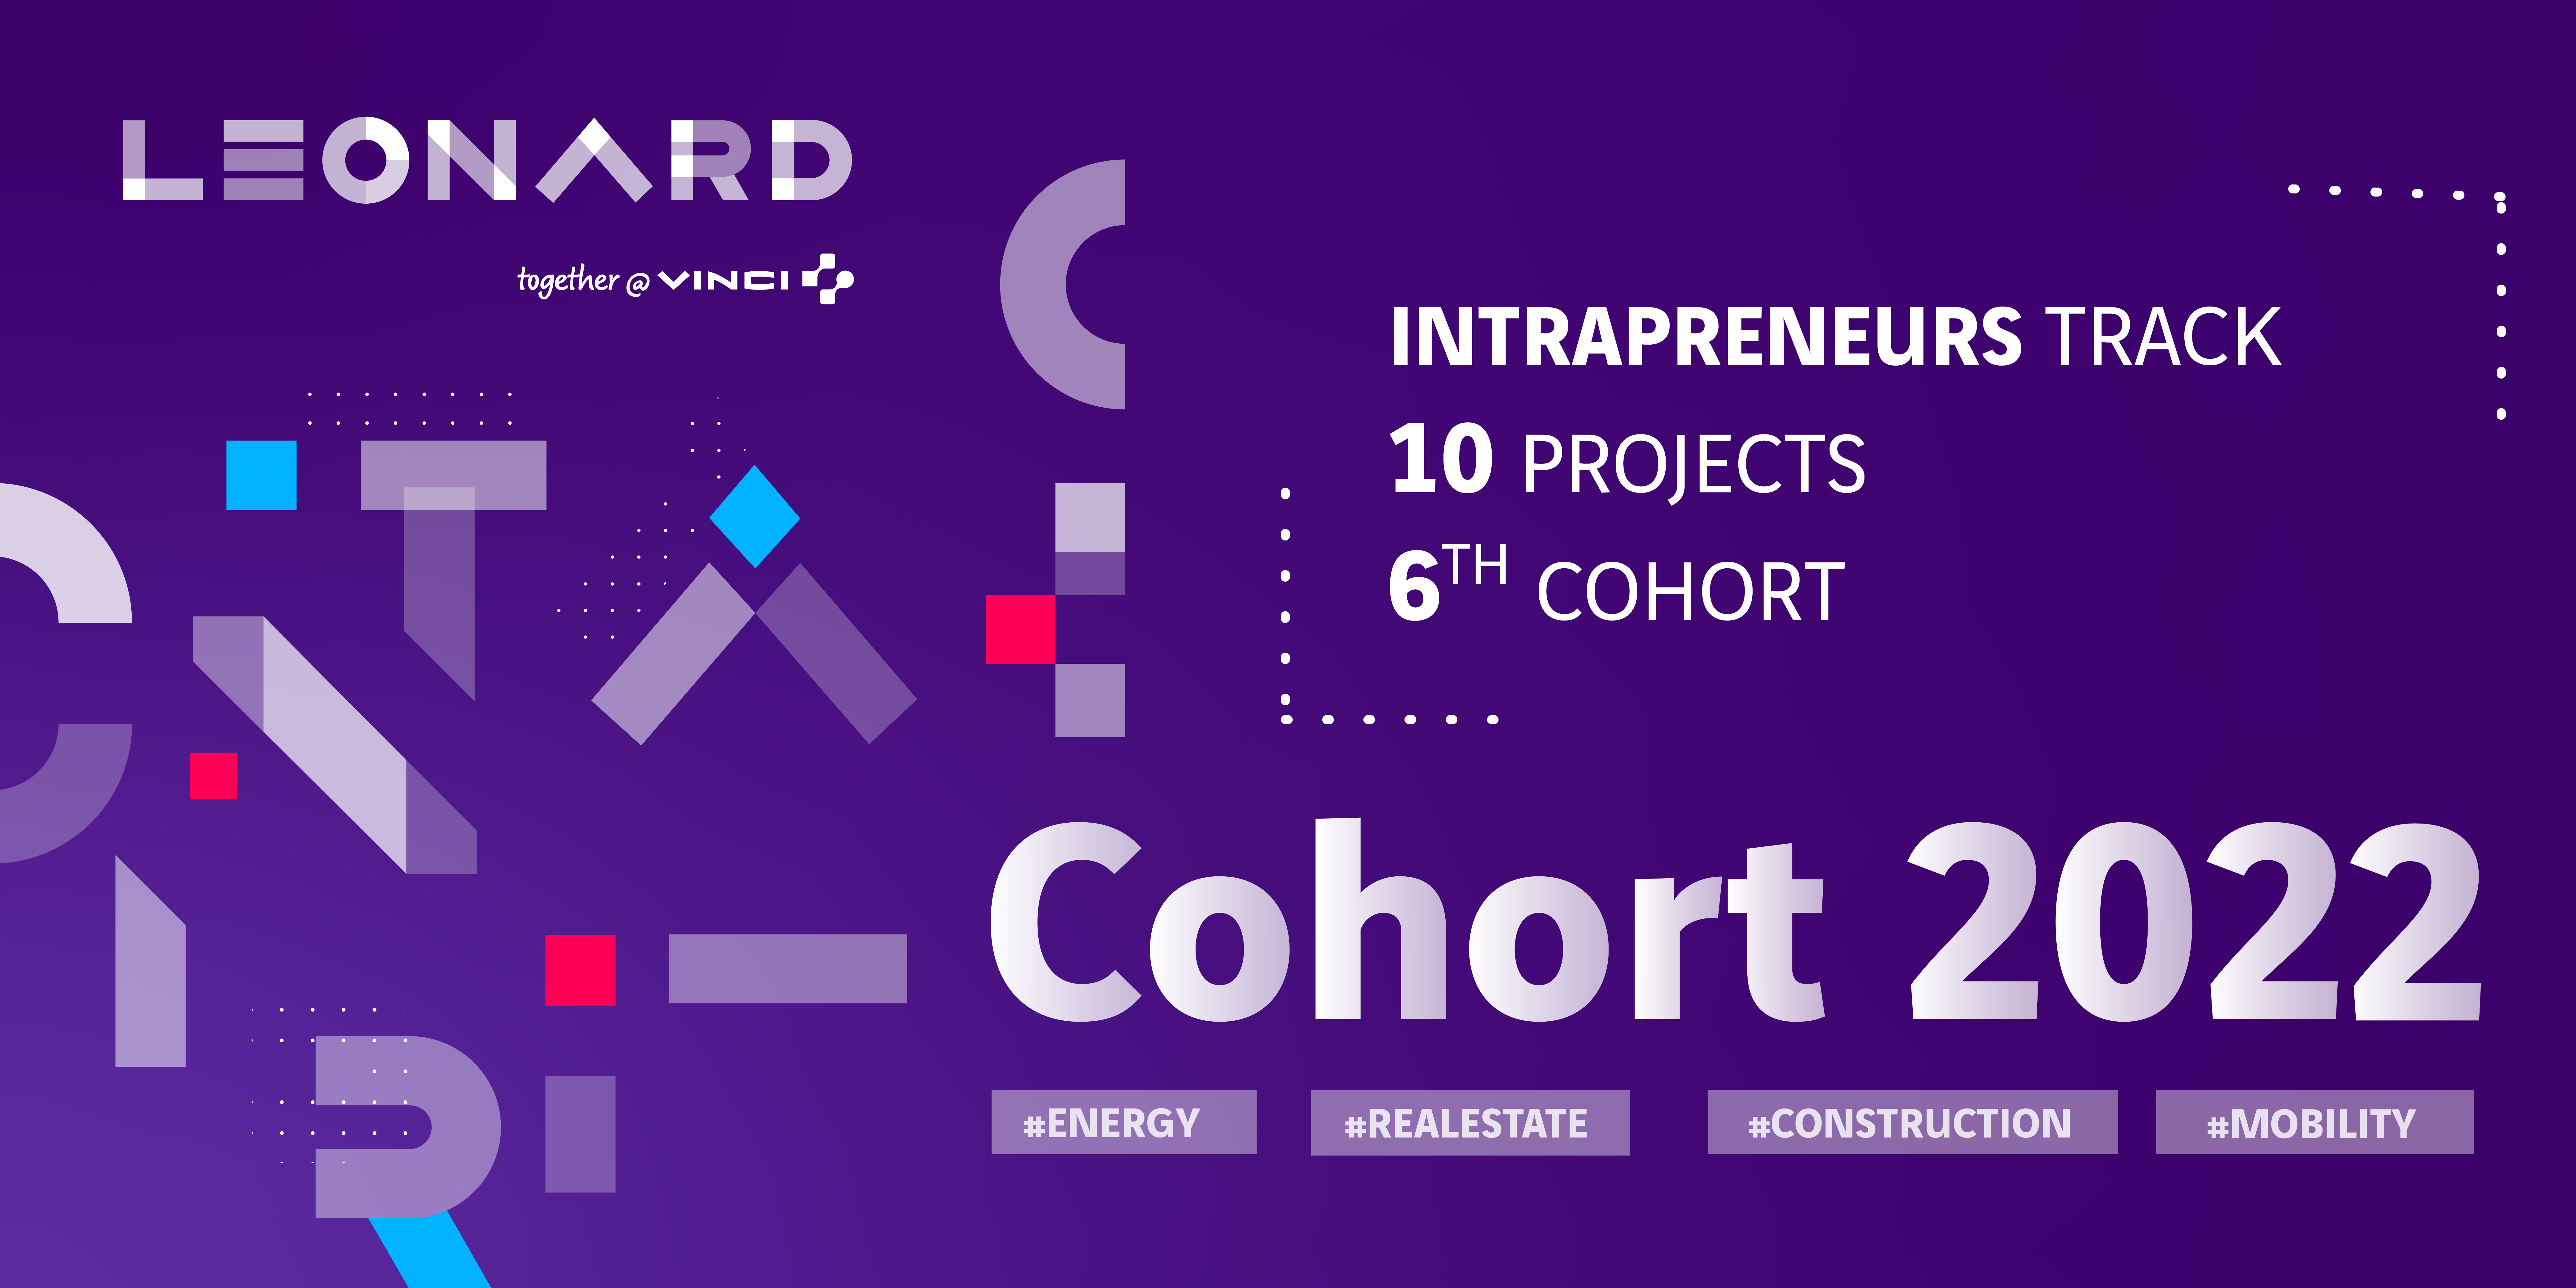 The 6th cohort of Leonard’s Intrapreneurs program hosts 10 teams of VINCI employees in 2022